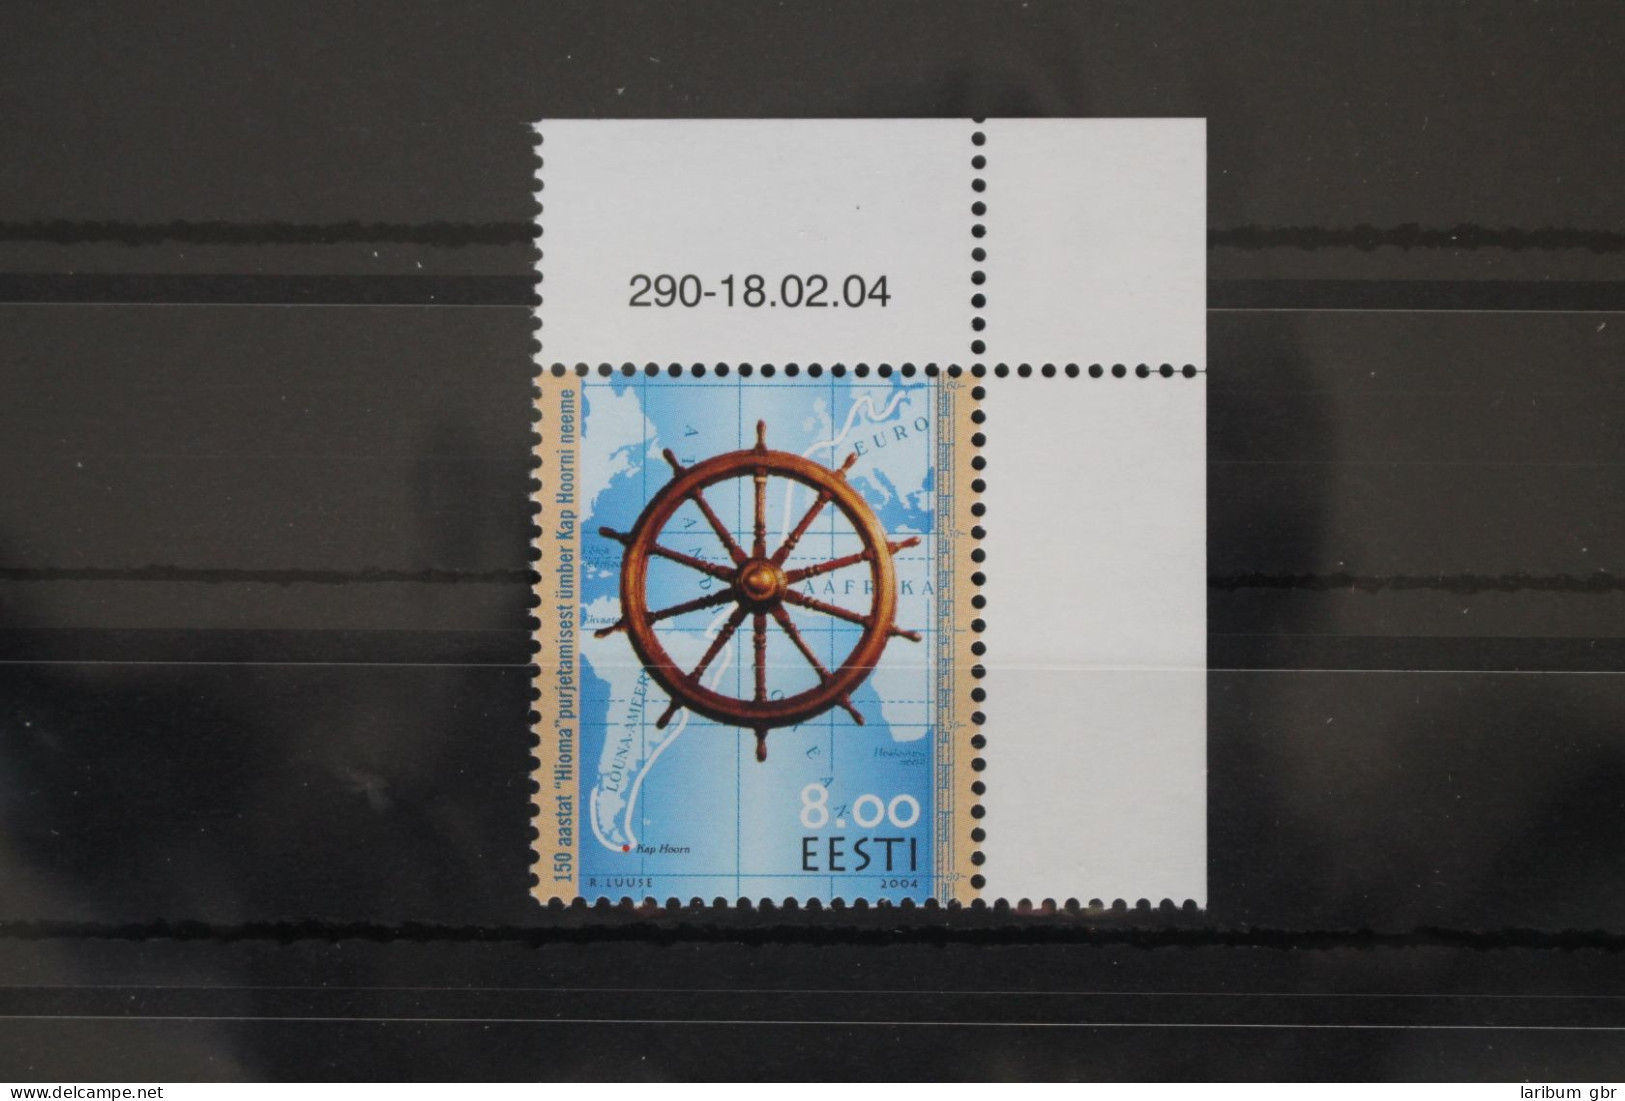 Estland 480 Postfrisch #WX914 - Estonia